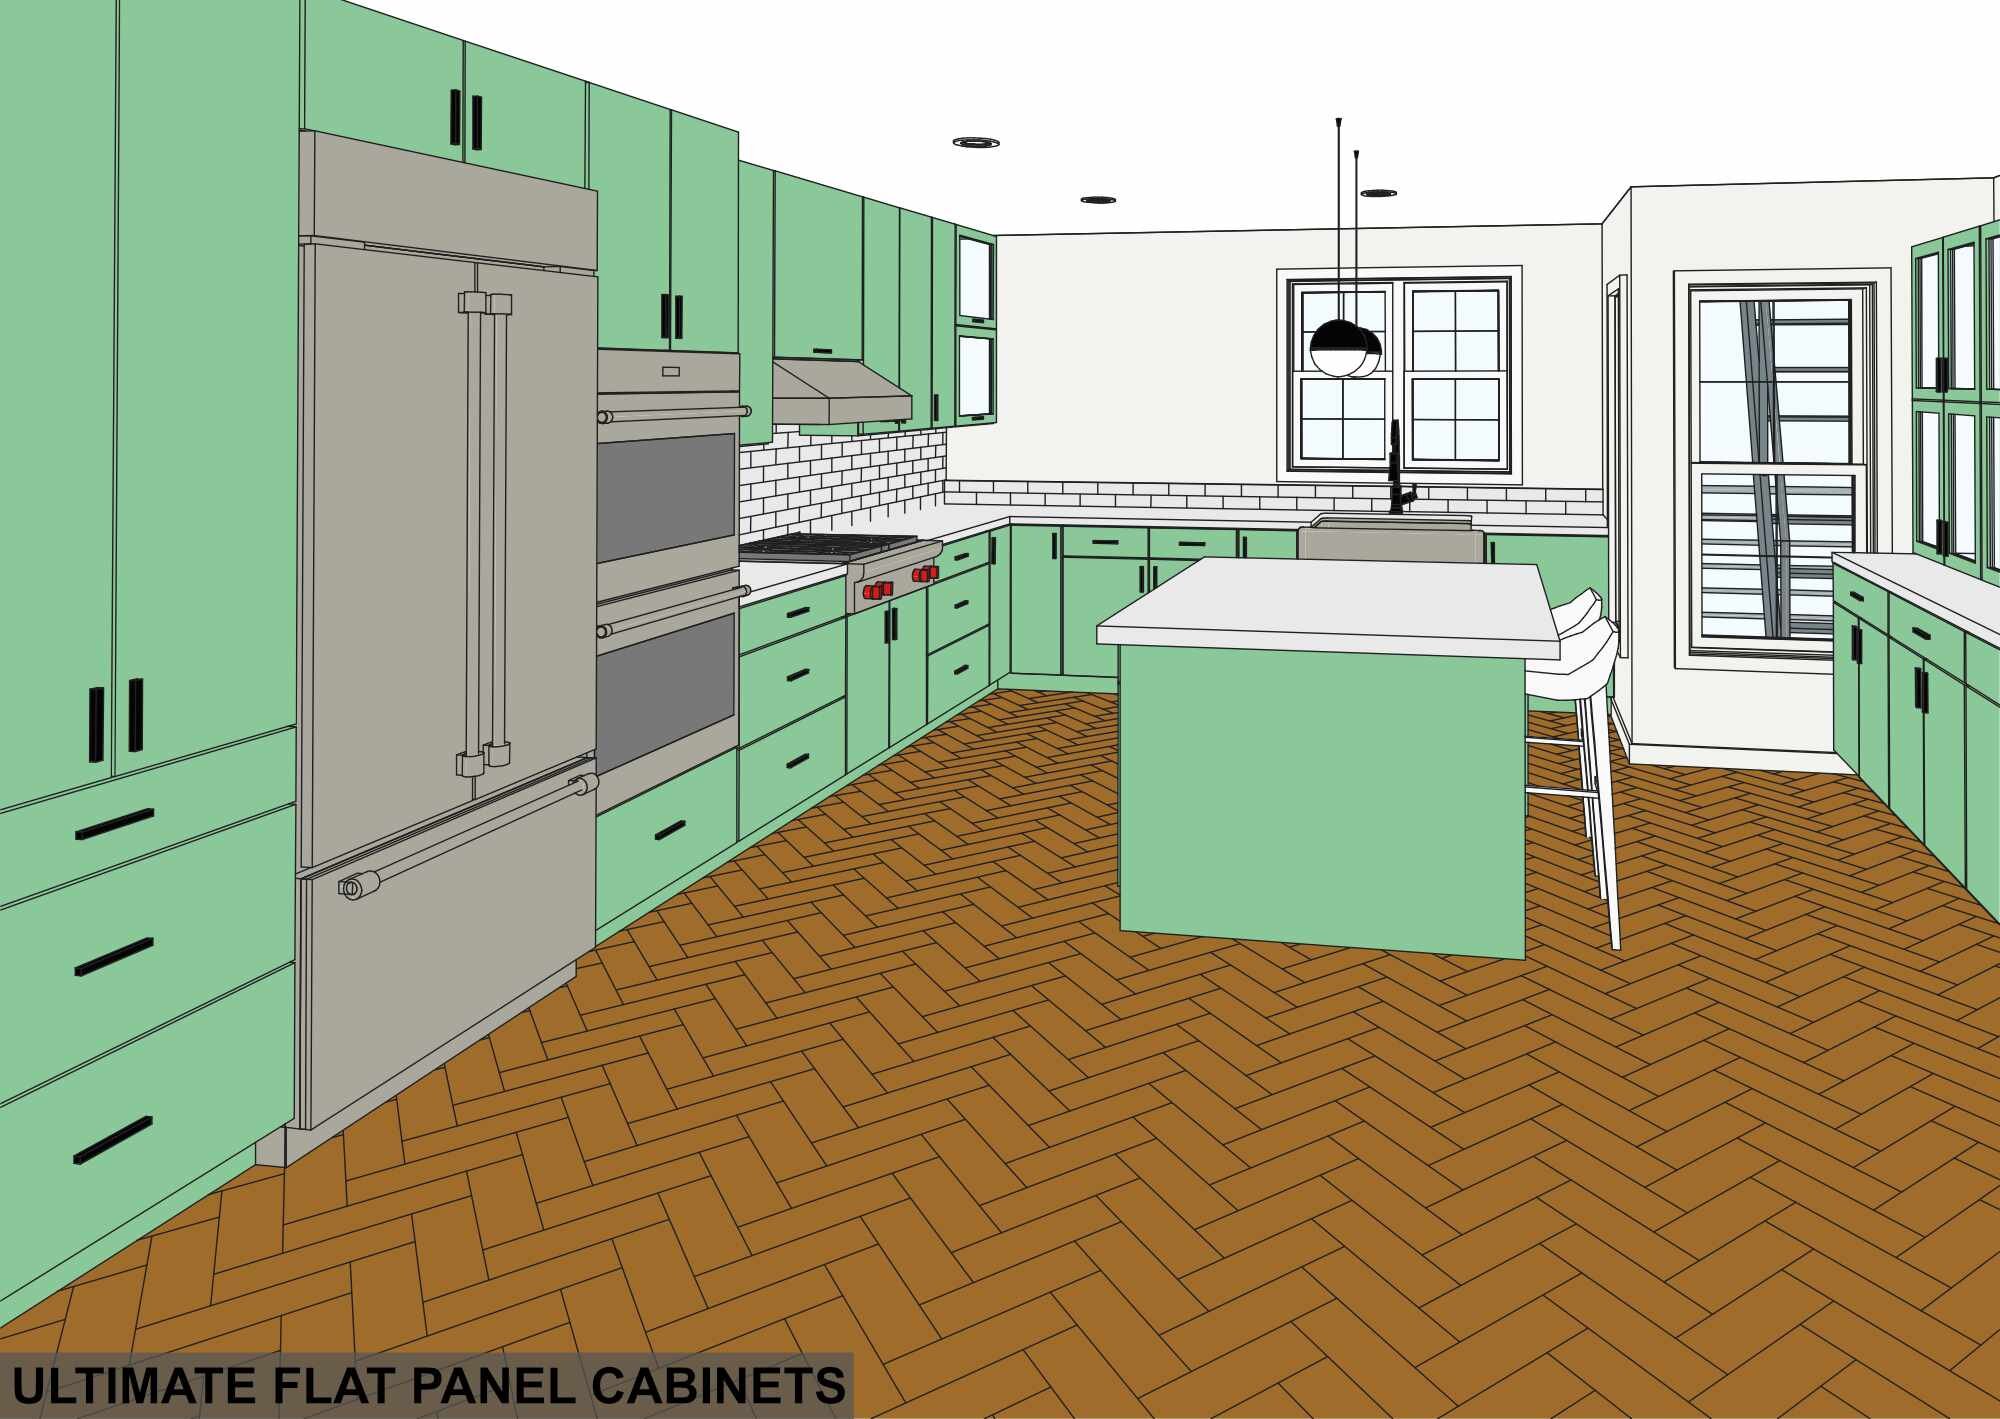 Revit family cabinet flat panel kitchen layout 3d options